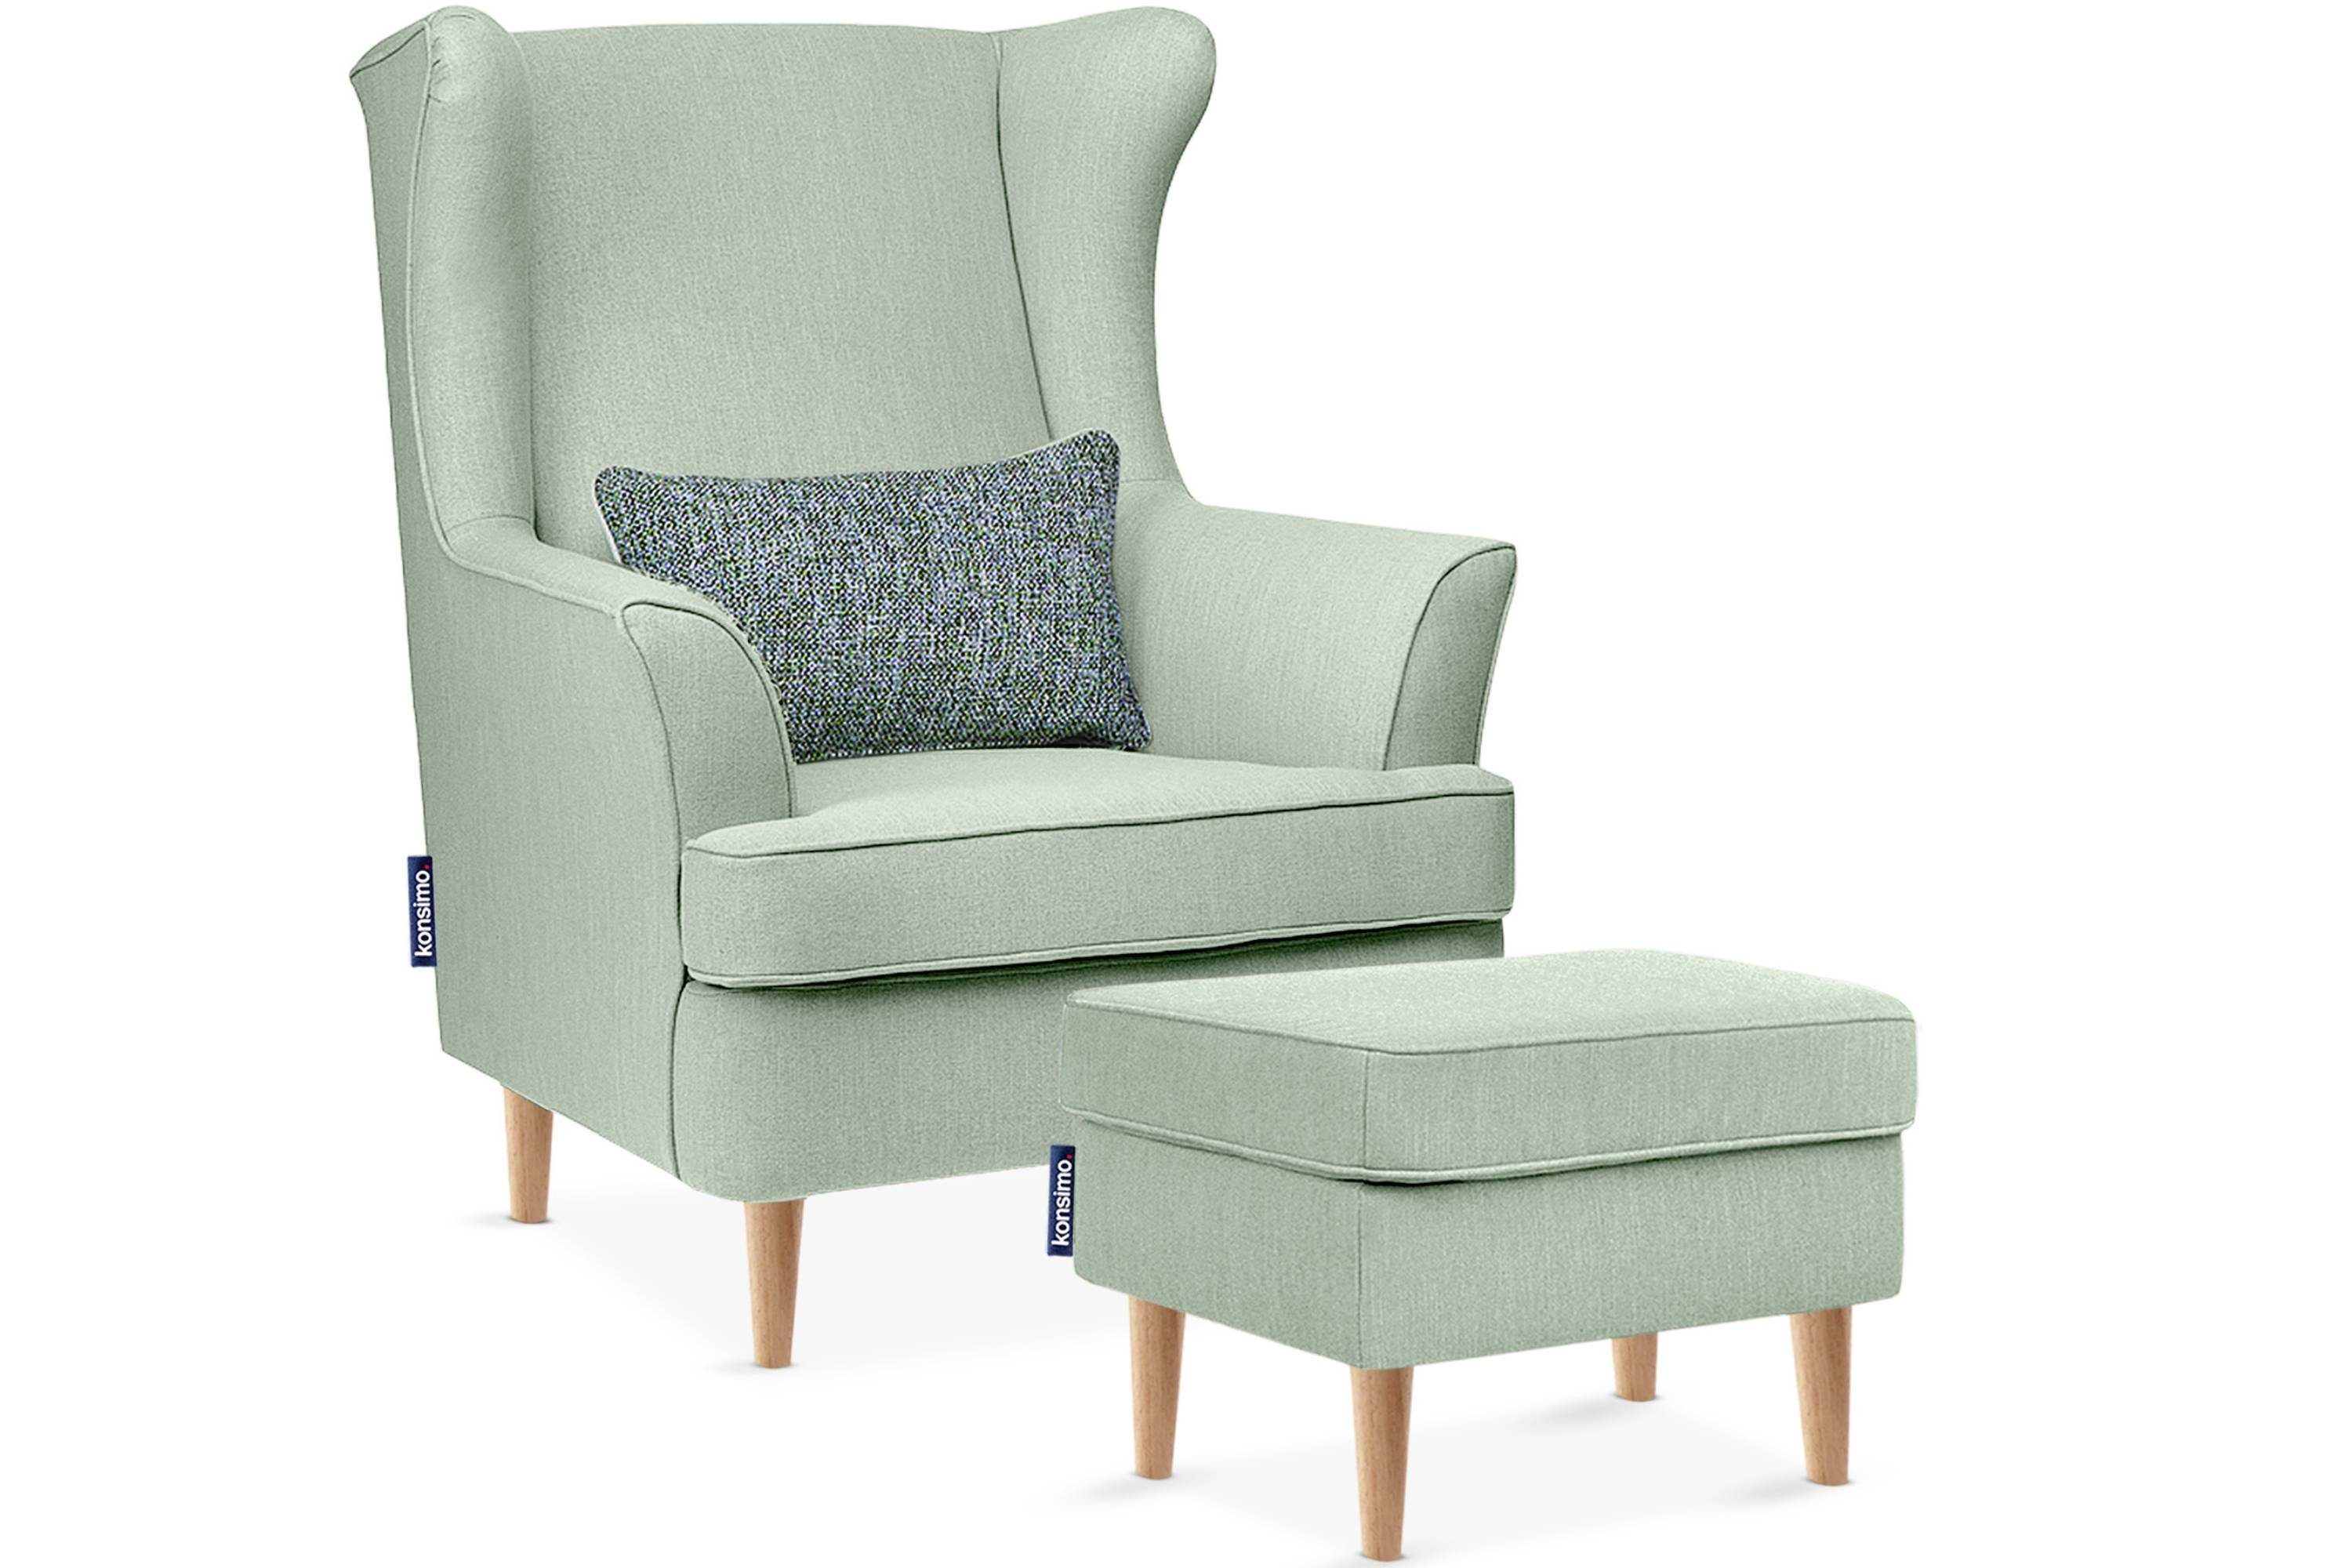 Design, Hocker, Kissen Ohrensessel dekorativem mit zeitloses inklusive STRALIS Füße, Sessel hohe Konsimo